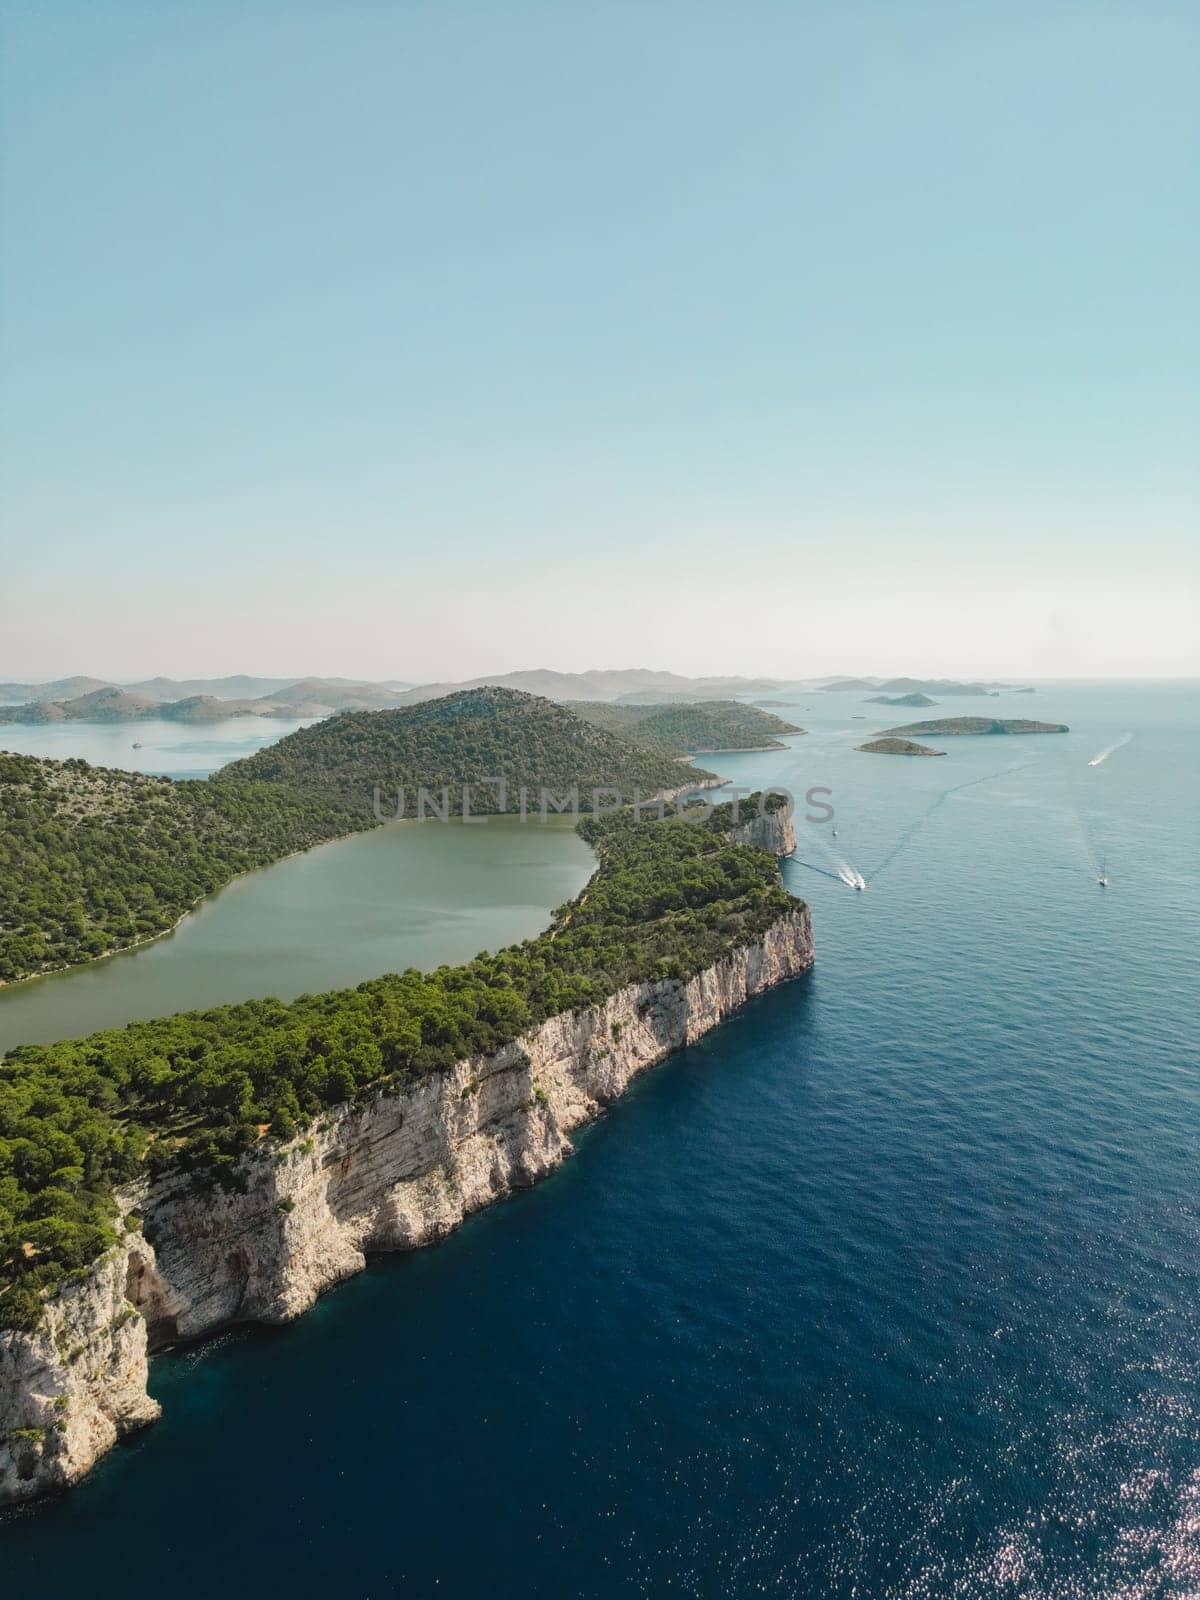 Drone view of Mir salt lake on Dugi Otok island, Telascica National Park with yachting tourism, Croatia